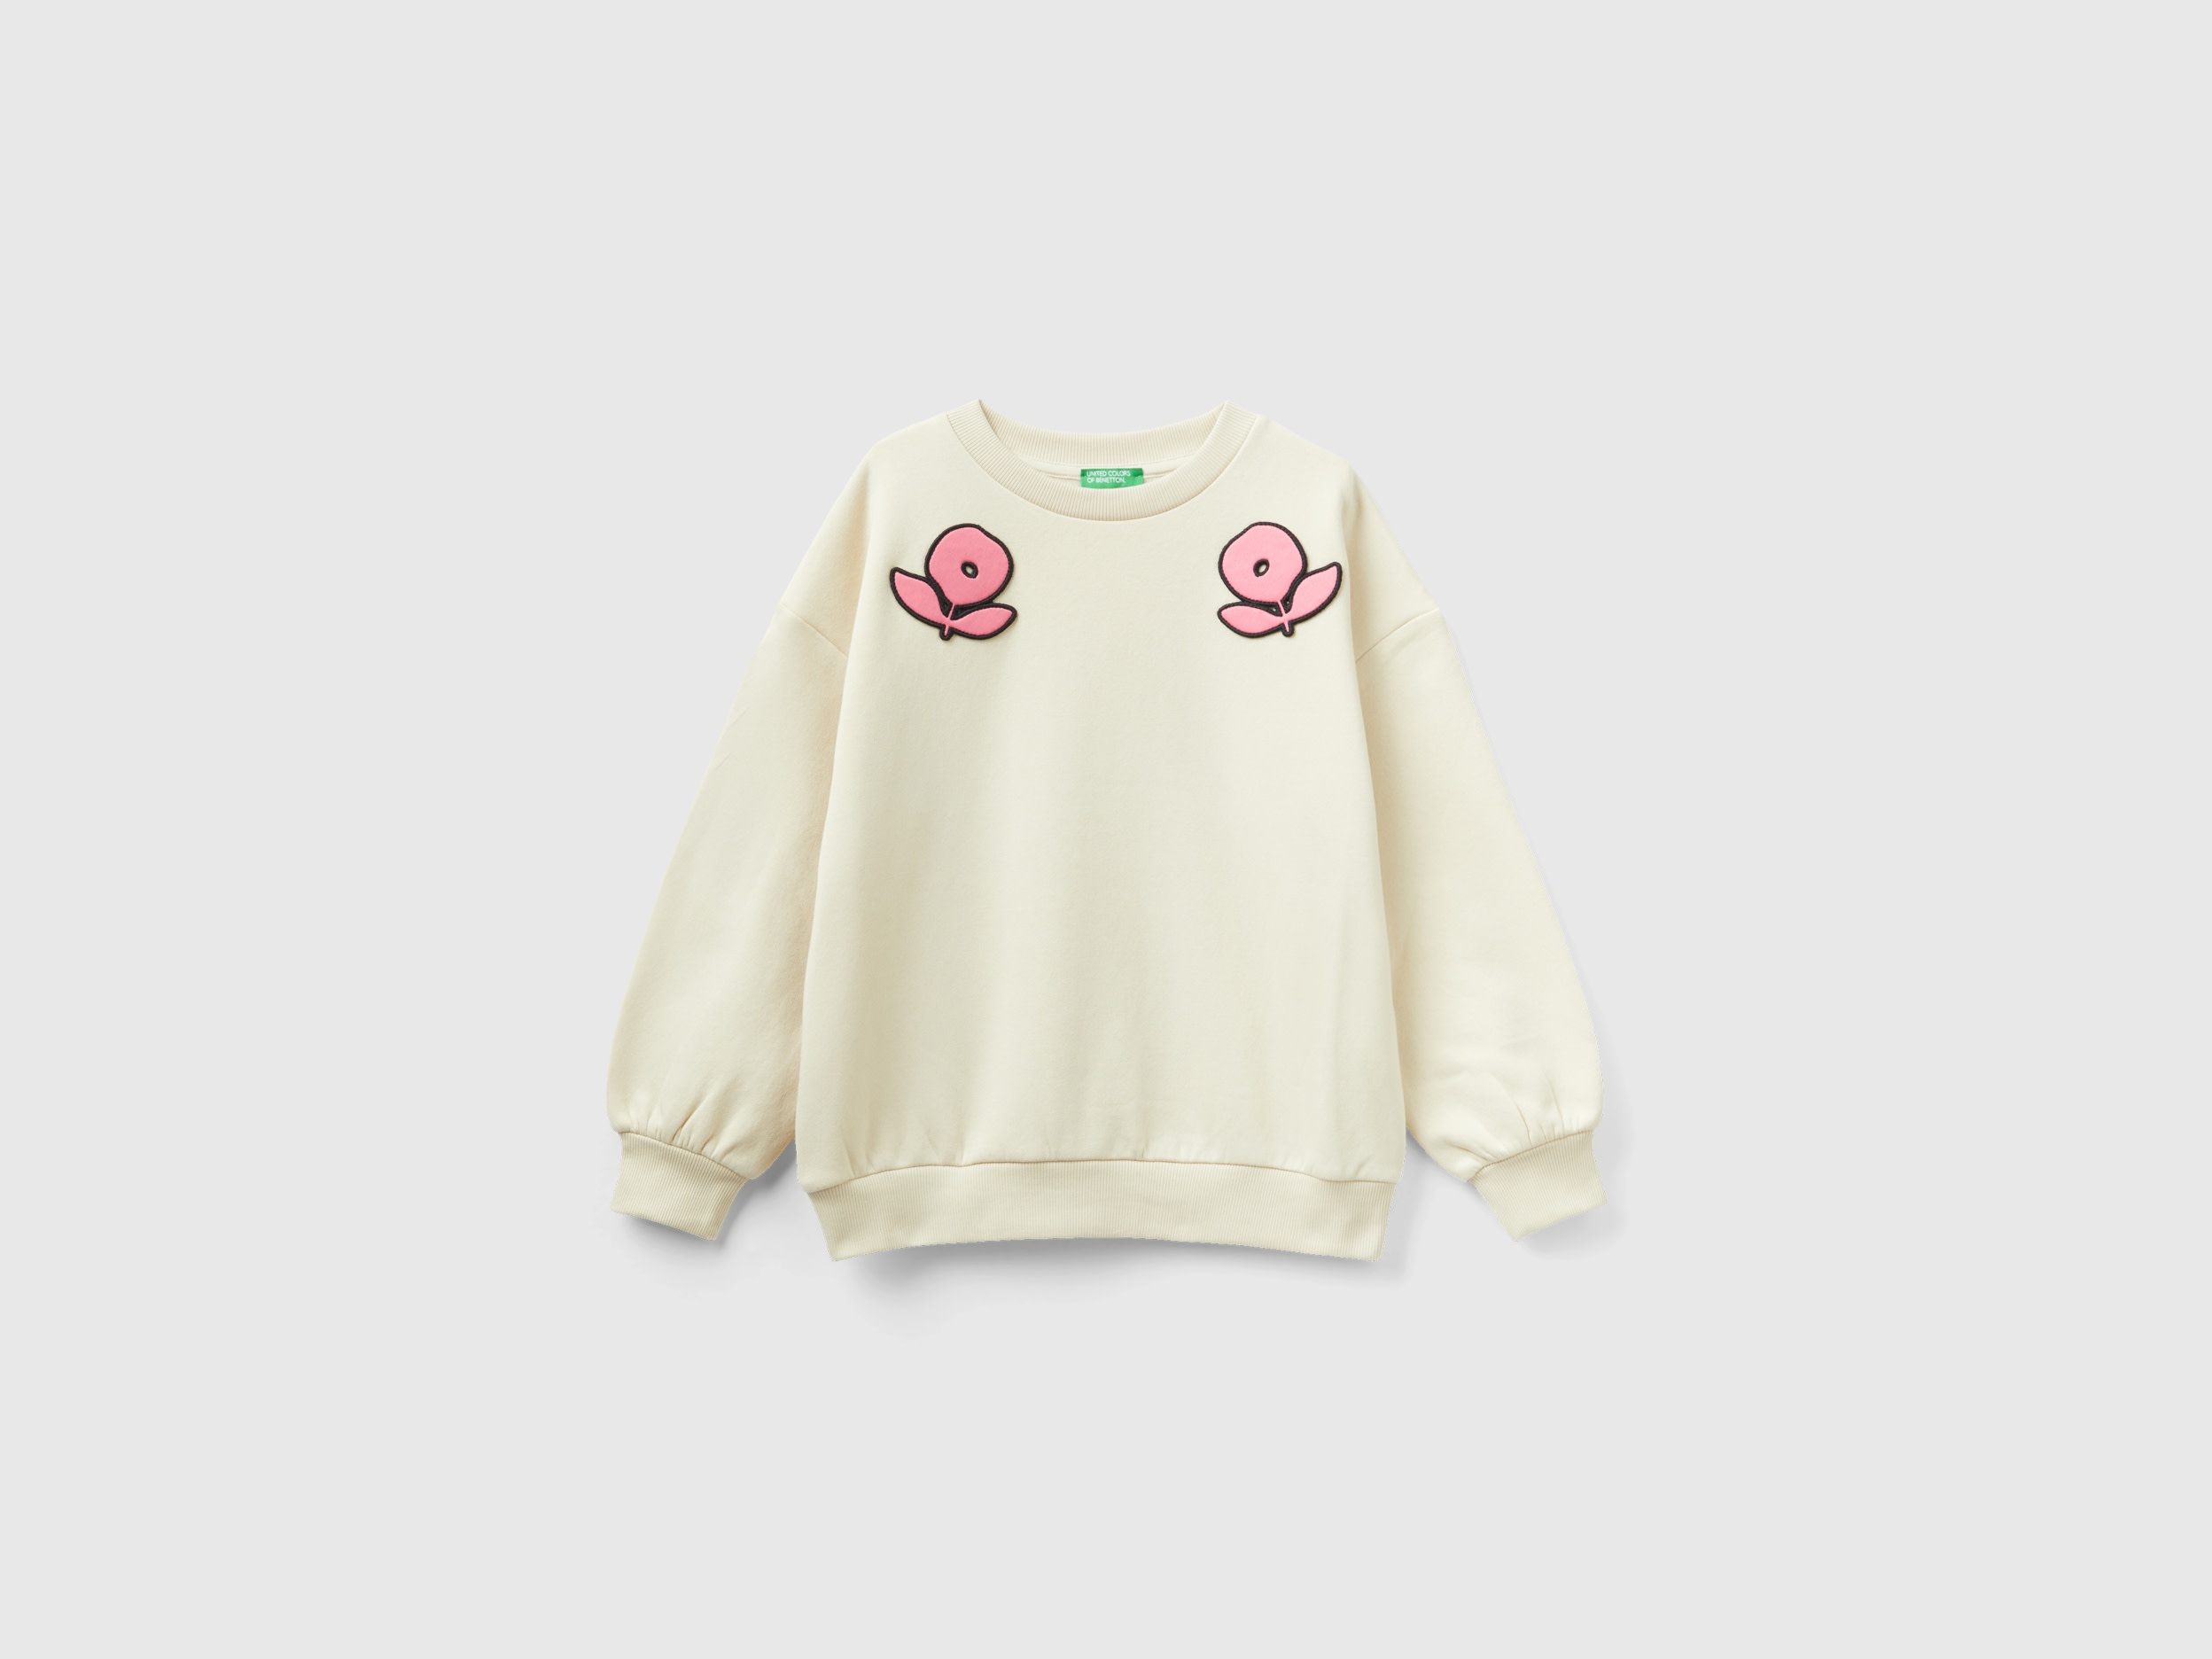 Benetton, Sweatshirt With Flower Patch, size M, Creamy White, Kids